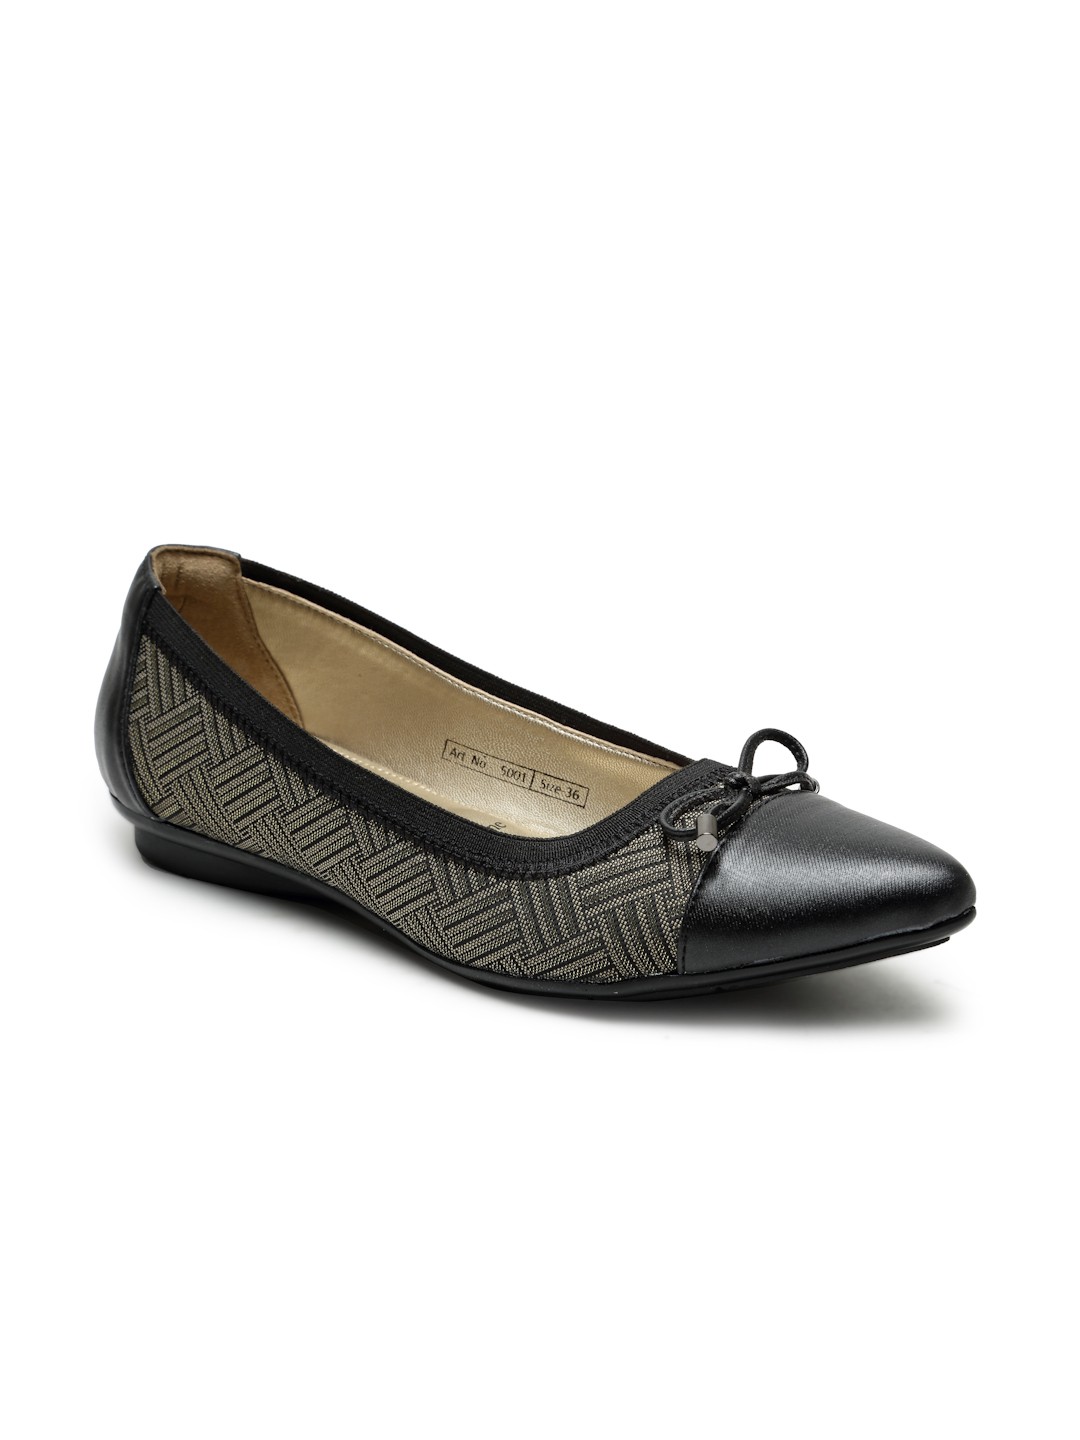 Buy Von Wellx Germany Comfort Women's Black Casual Shoes Lisa Online in Pune